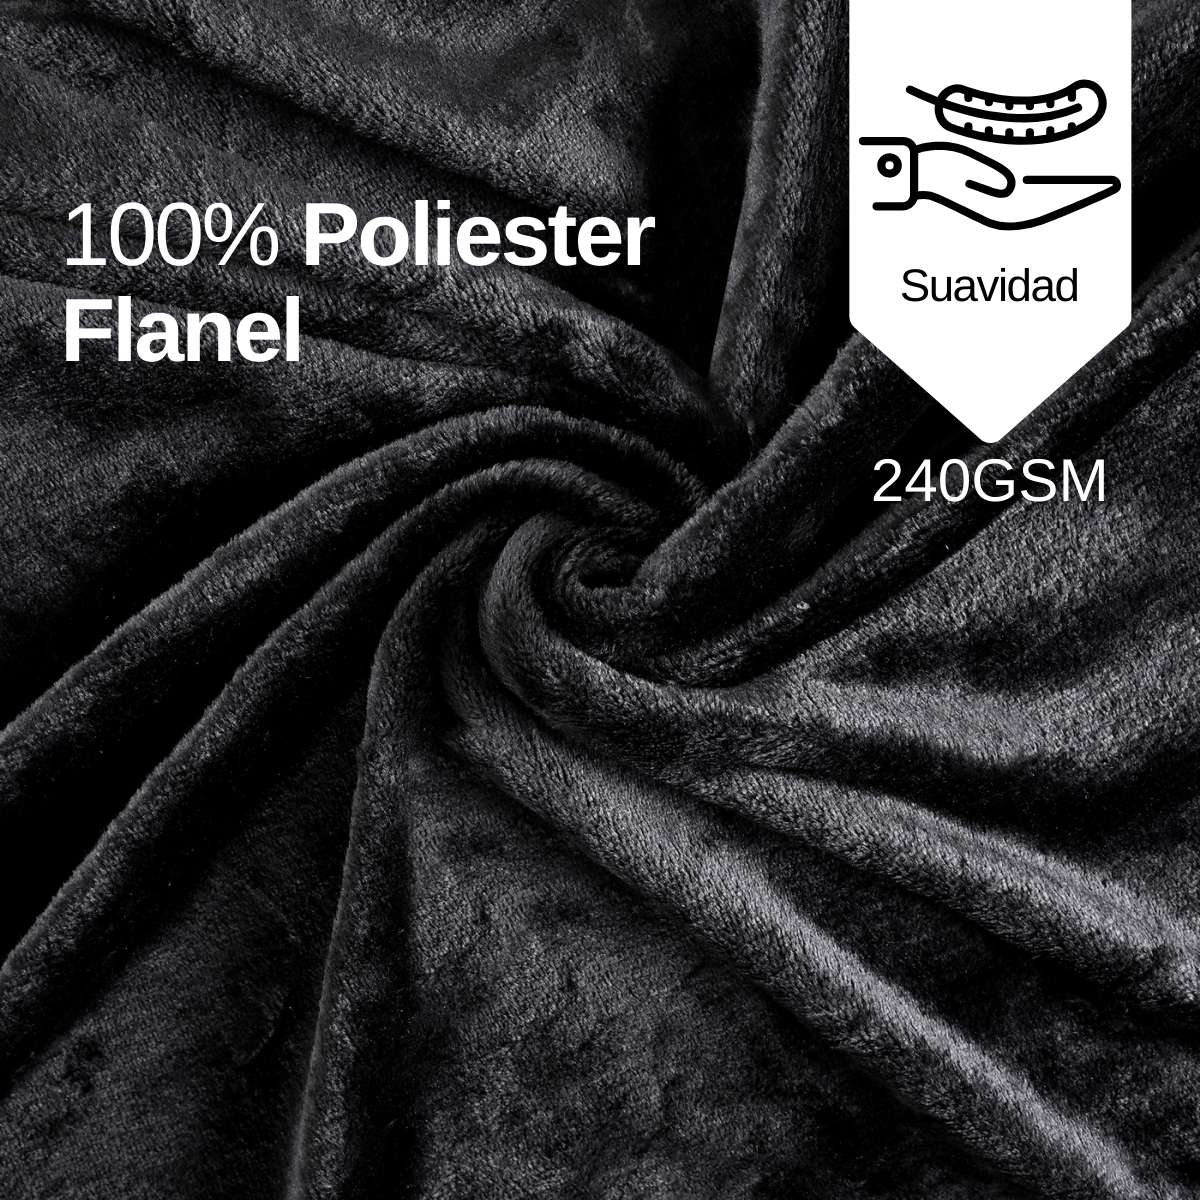 Cobija de flanel color negro tamaño individual, 100% poliéster